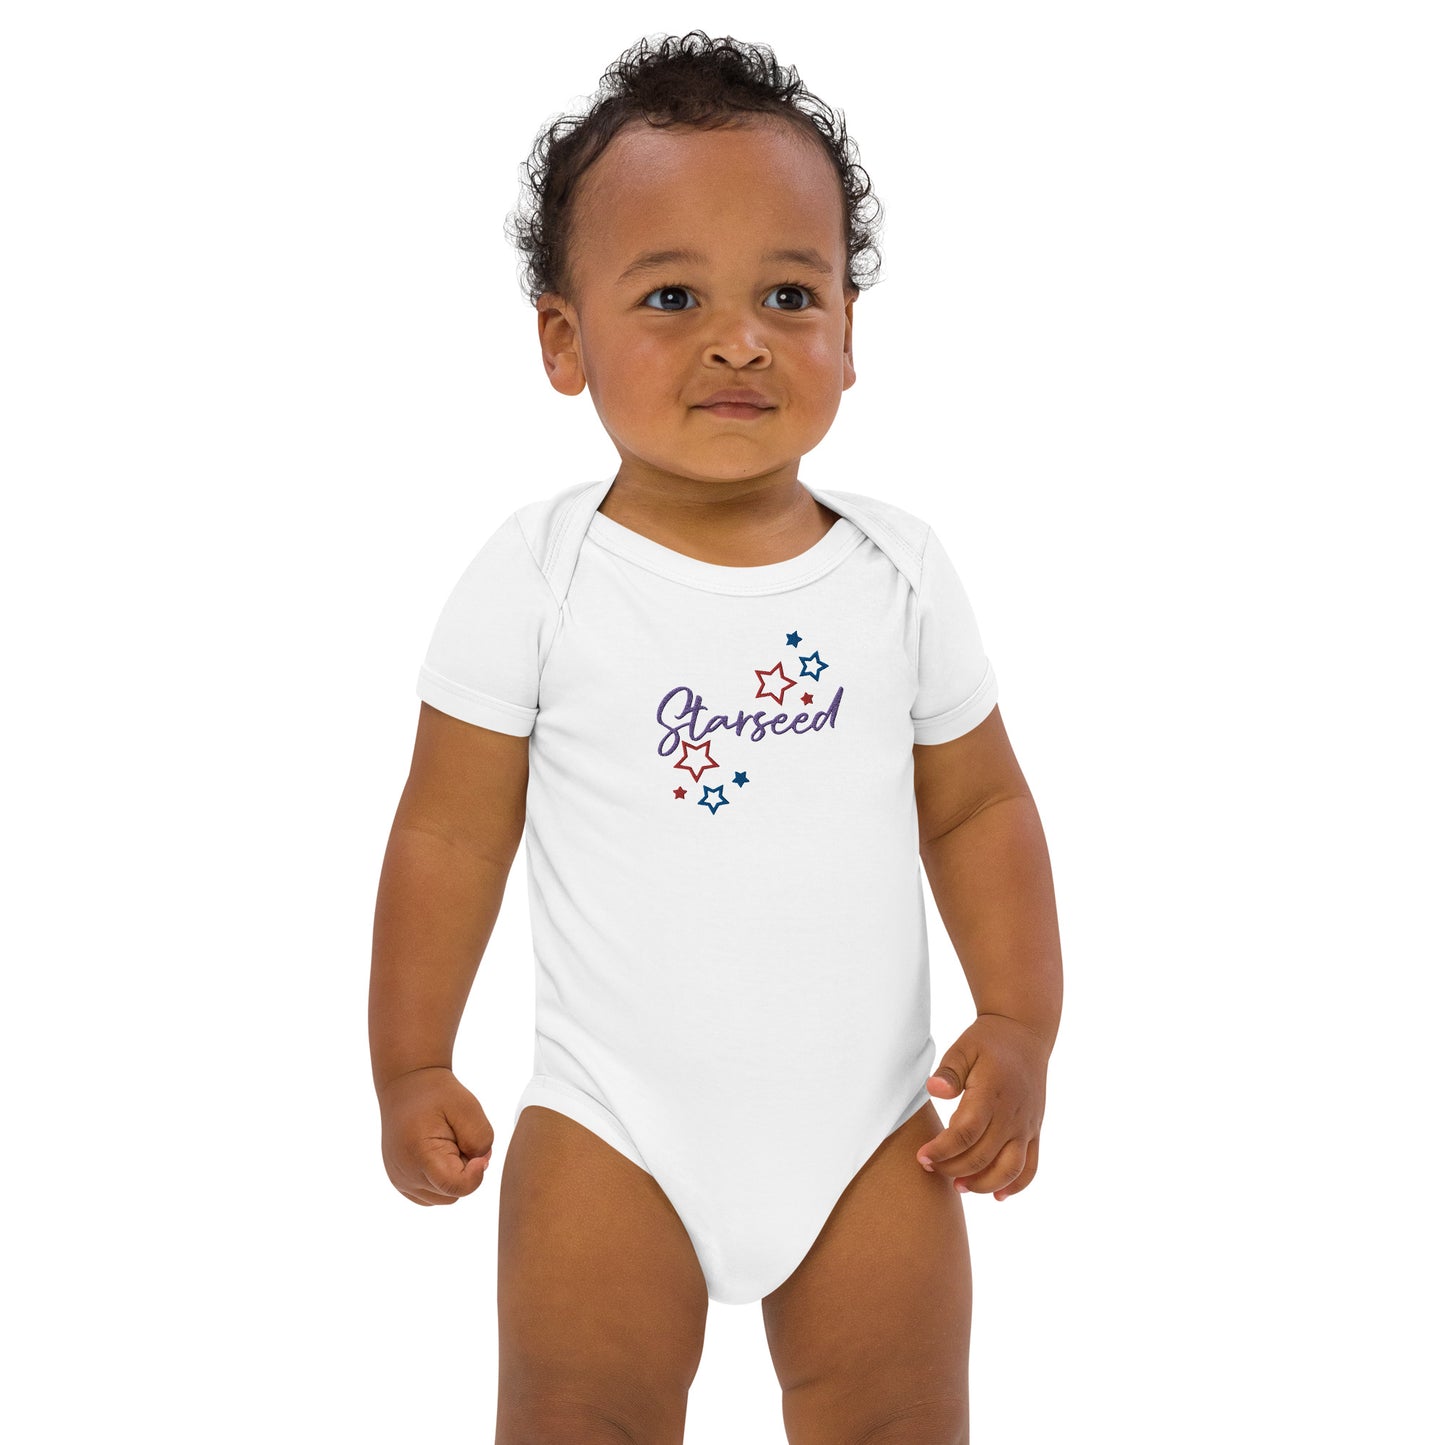 Starseed baby bodysuit